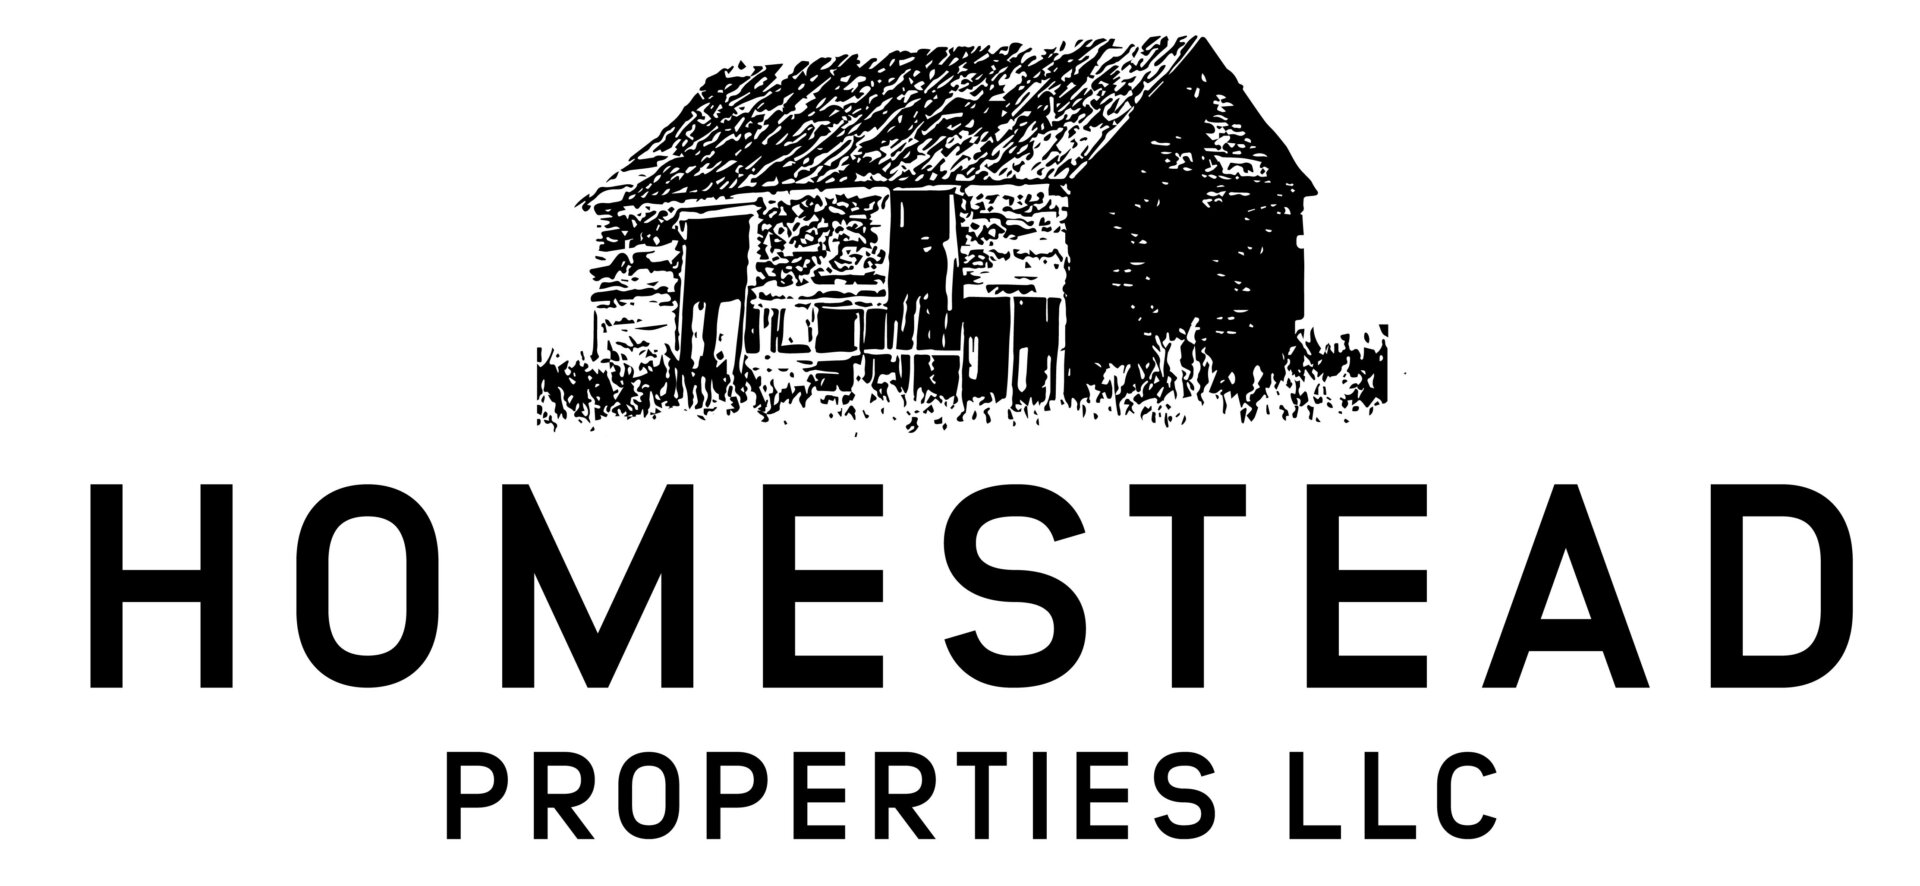 Homestead Properties LLC logo